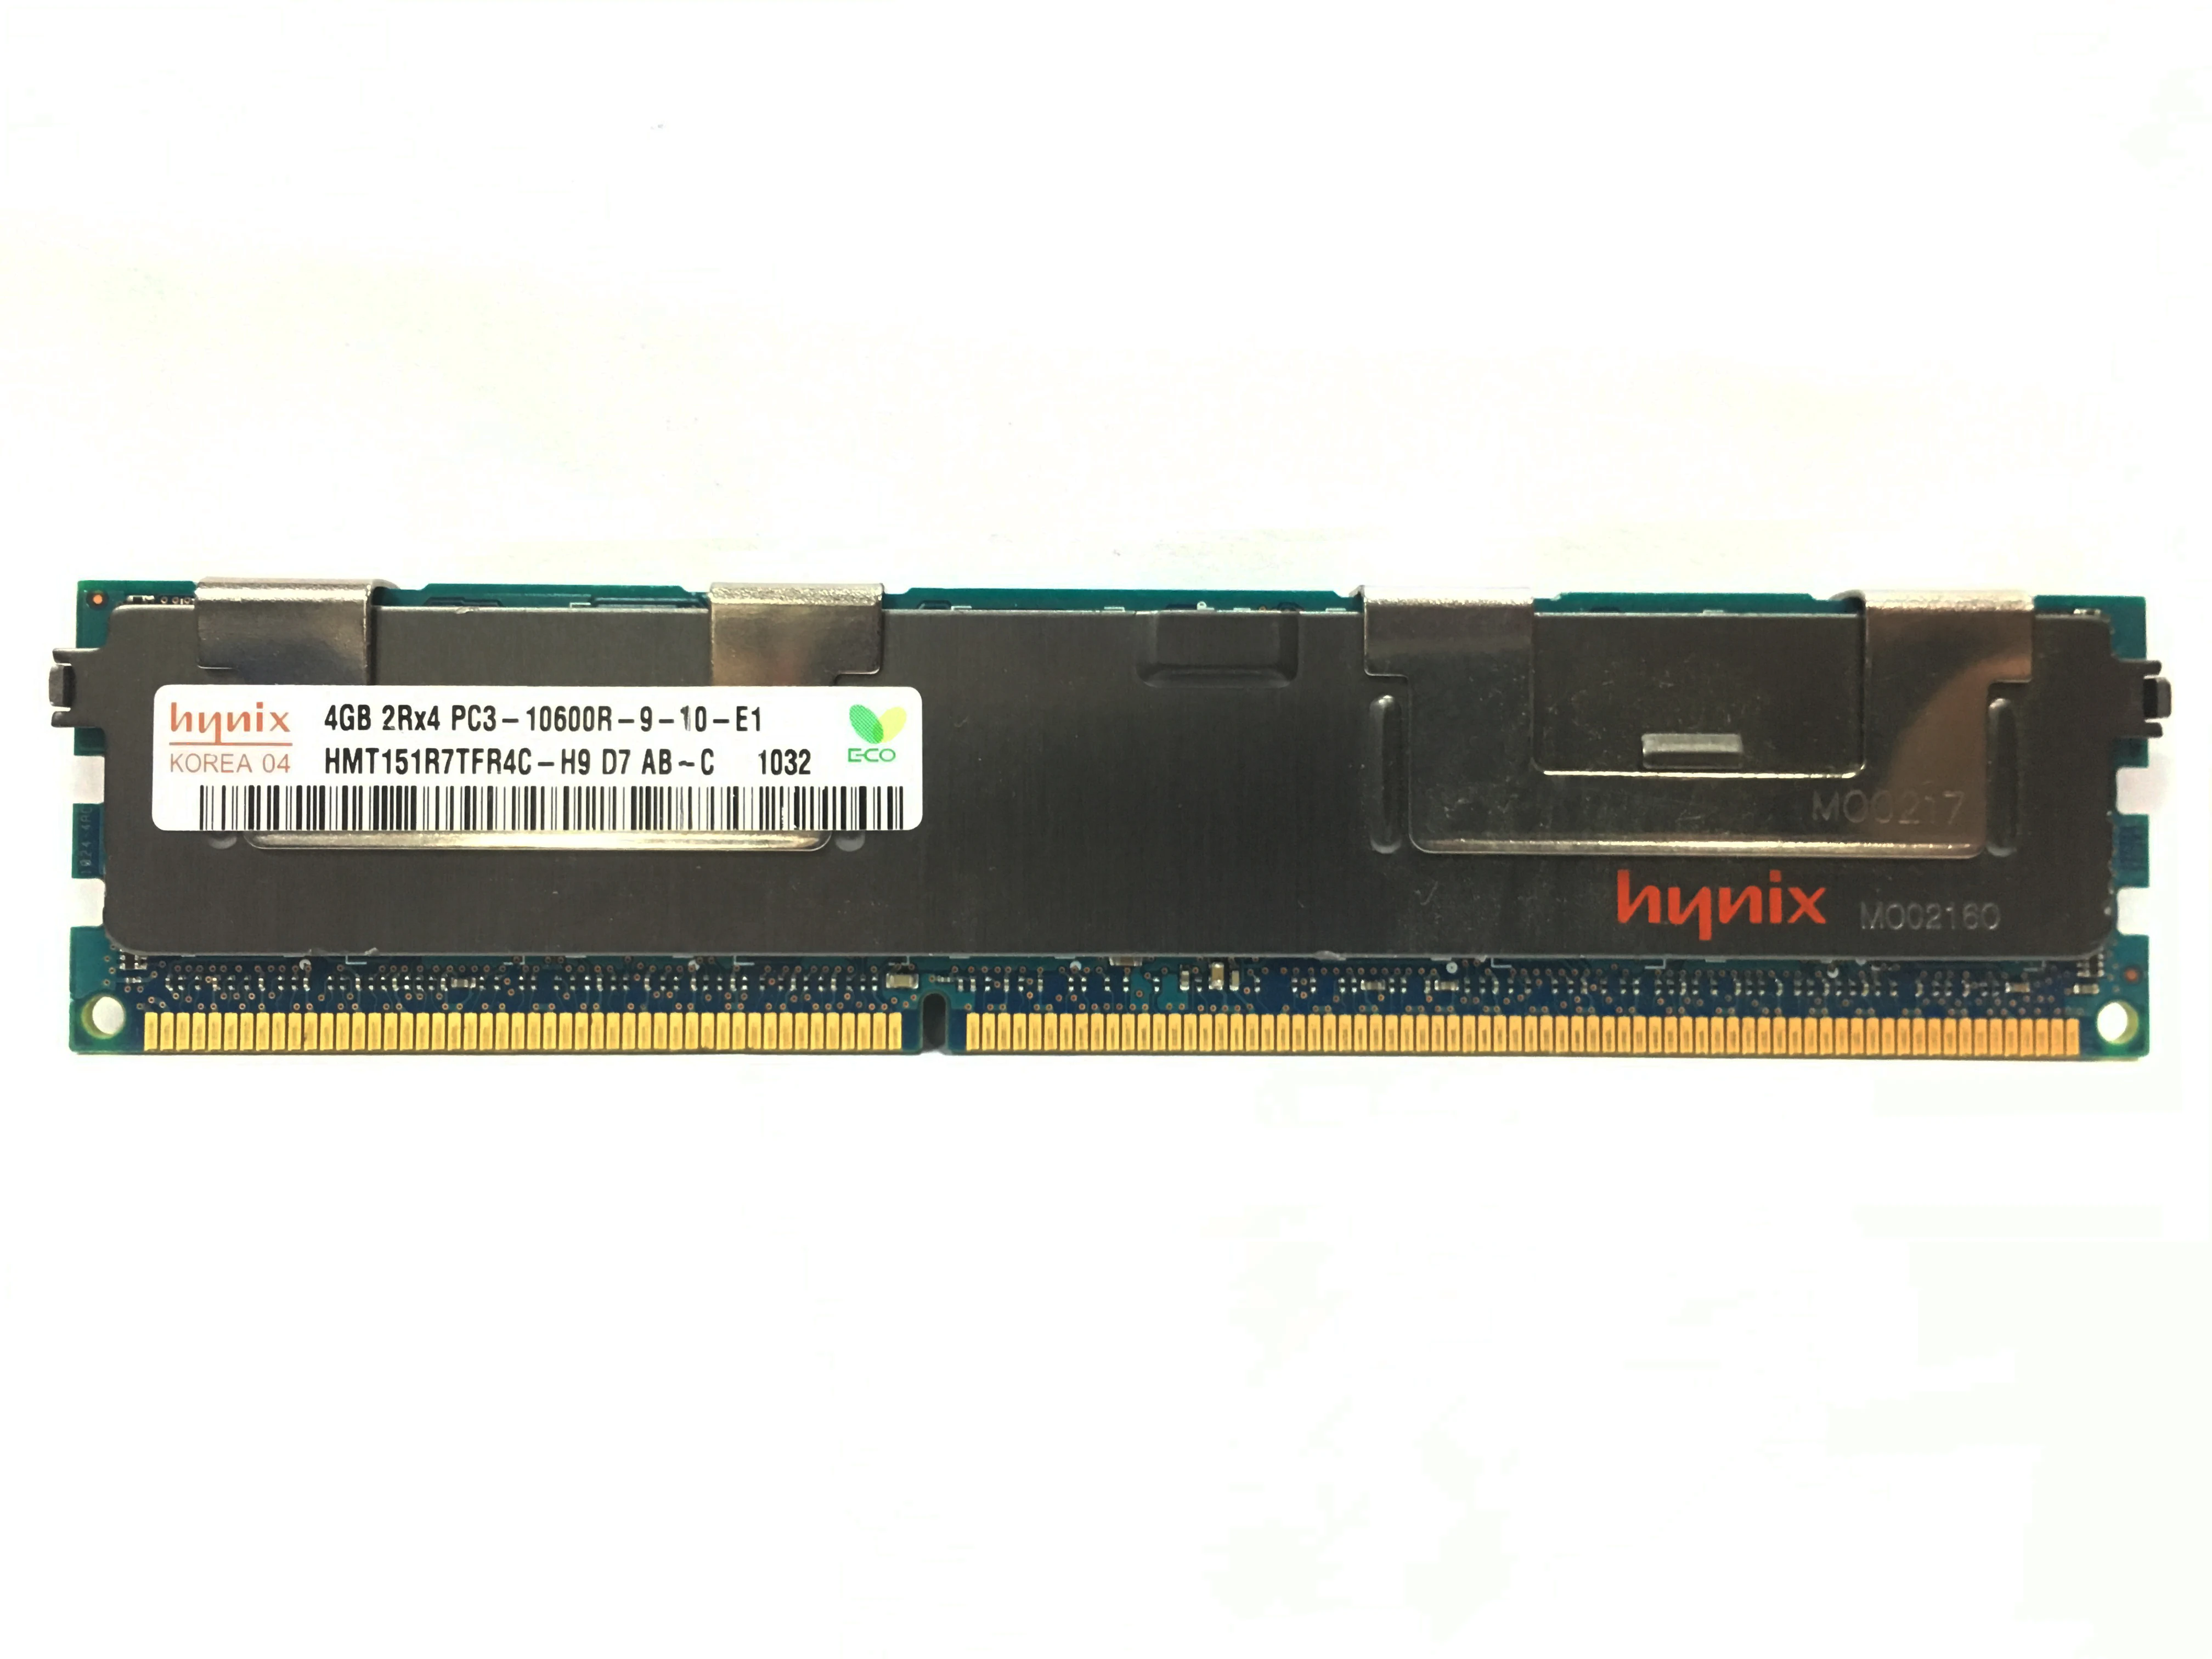 Hynix DDR3 4 ГБ 8 ГБ оперативной памяти, 16 Гб встроенной памяти, 32 ГБ памяти сервера 1333 МГц 1600 1866 МГц ECC REG PC3 регистрация DIMM Оперативная память 8 ГБ 16 ГБ 32G 1333 1600 1866 МГц